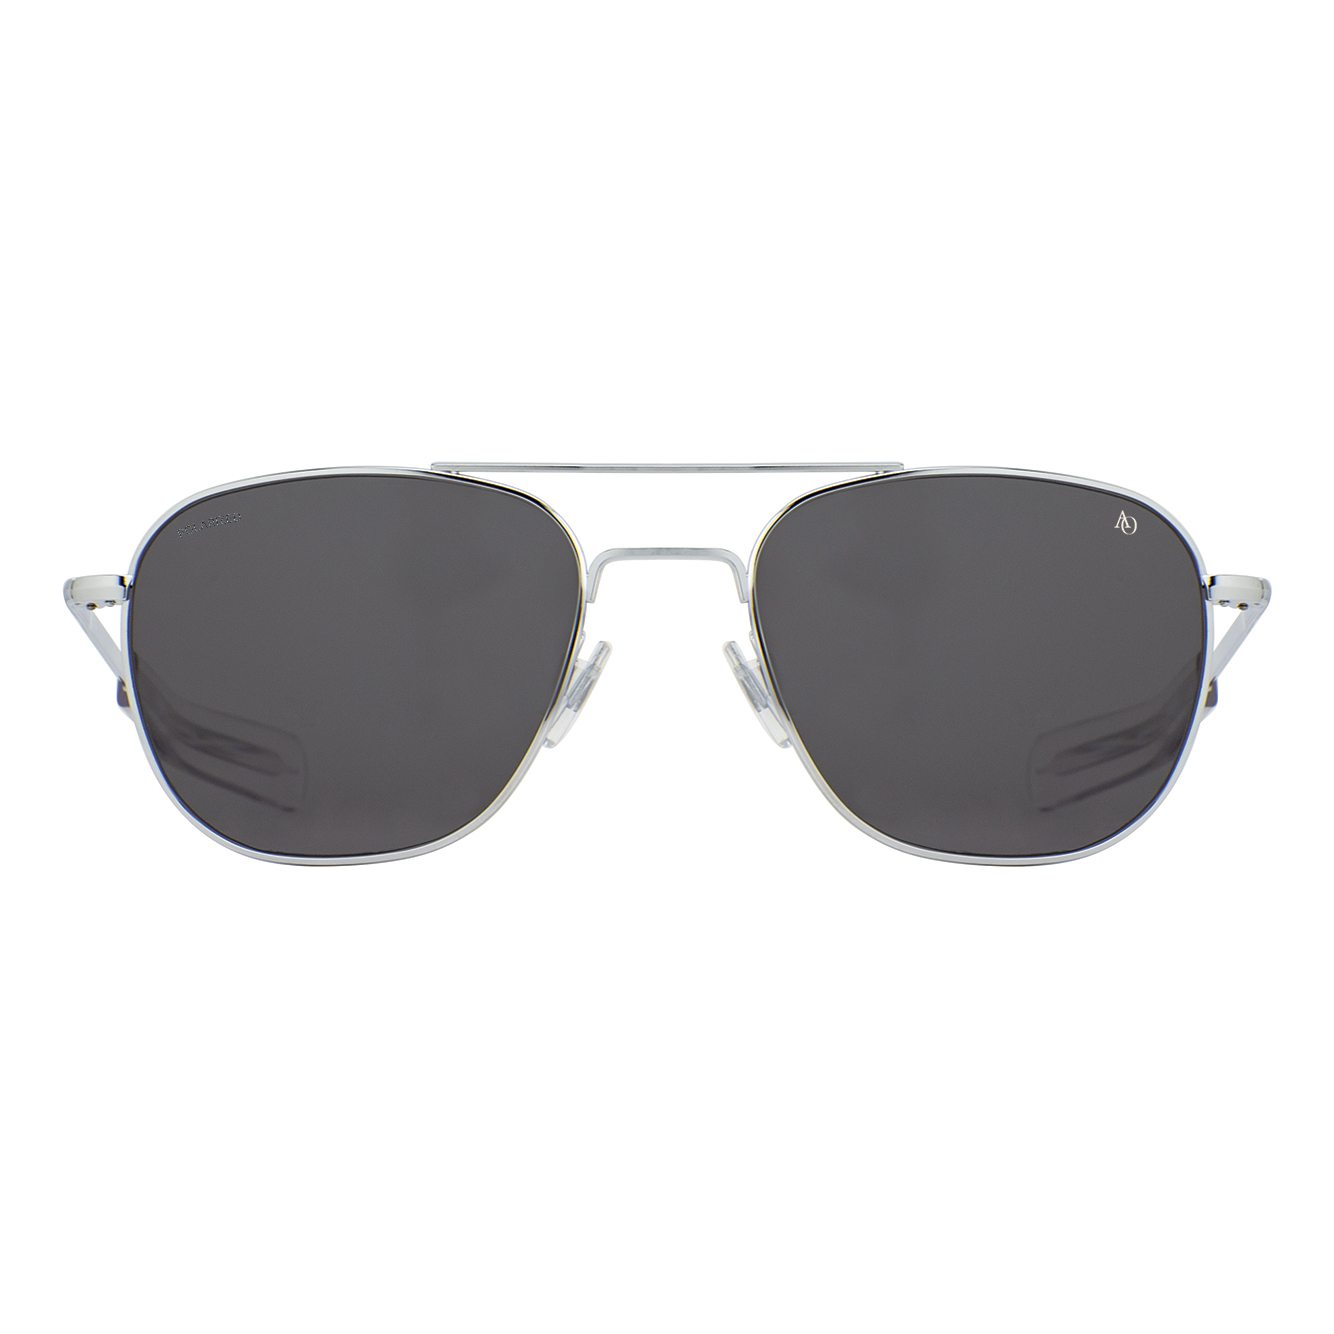 Why Do Pilots Wear Aviator Sunglasses? – Randolph USA